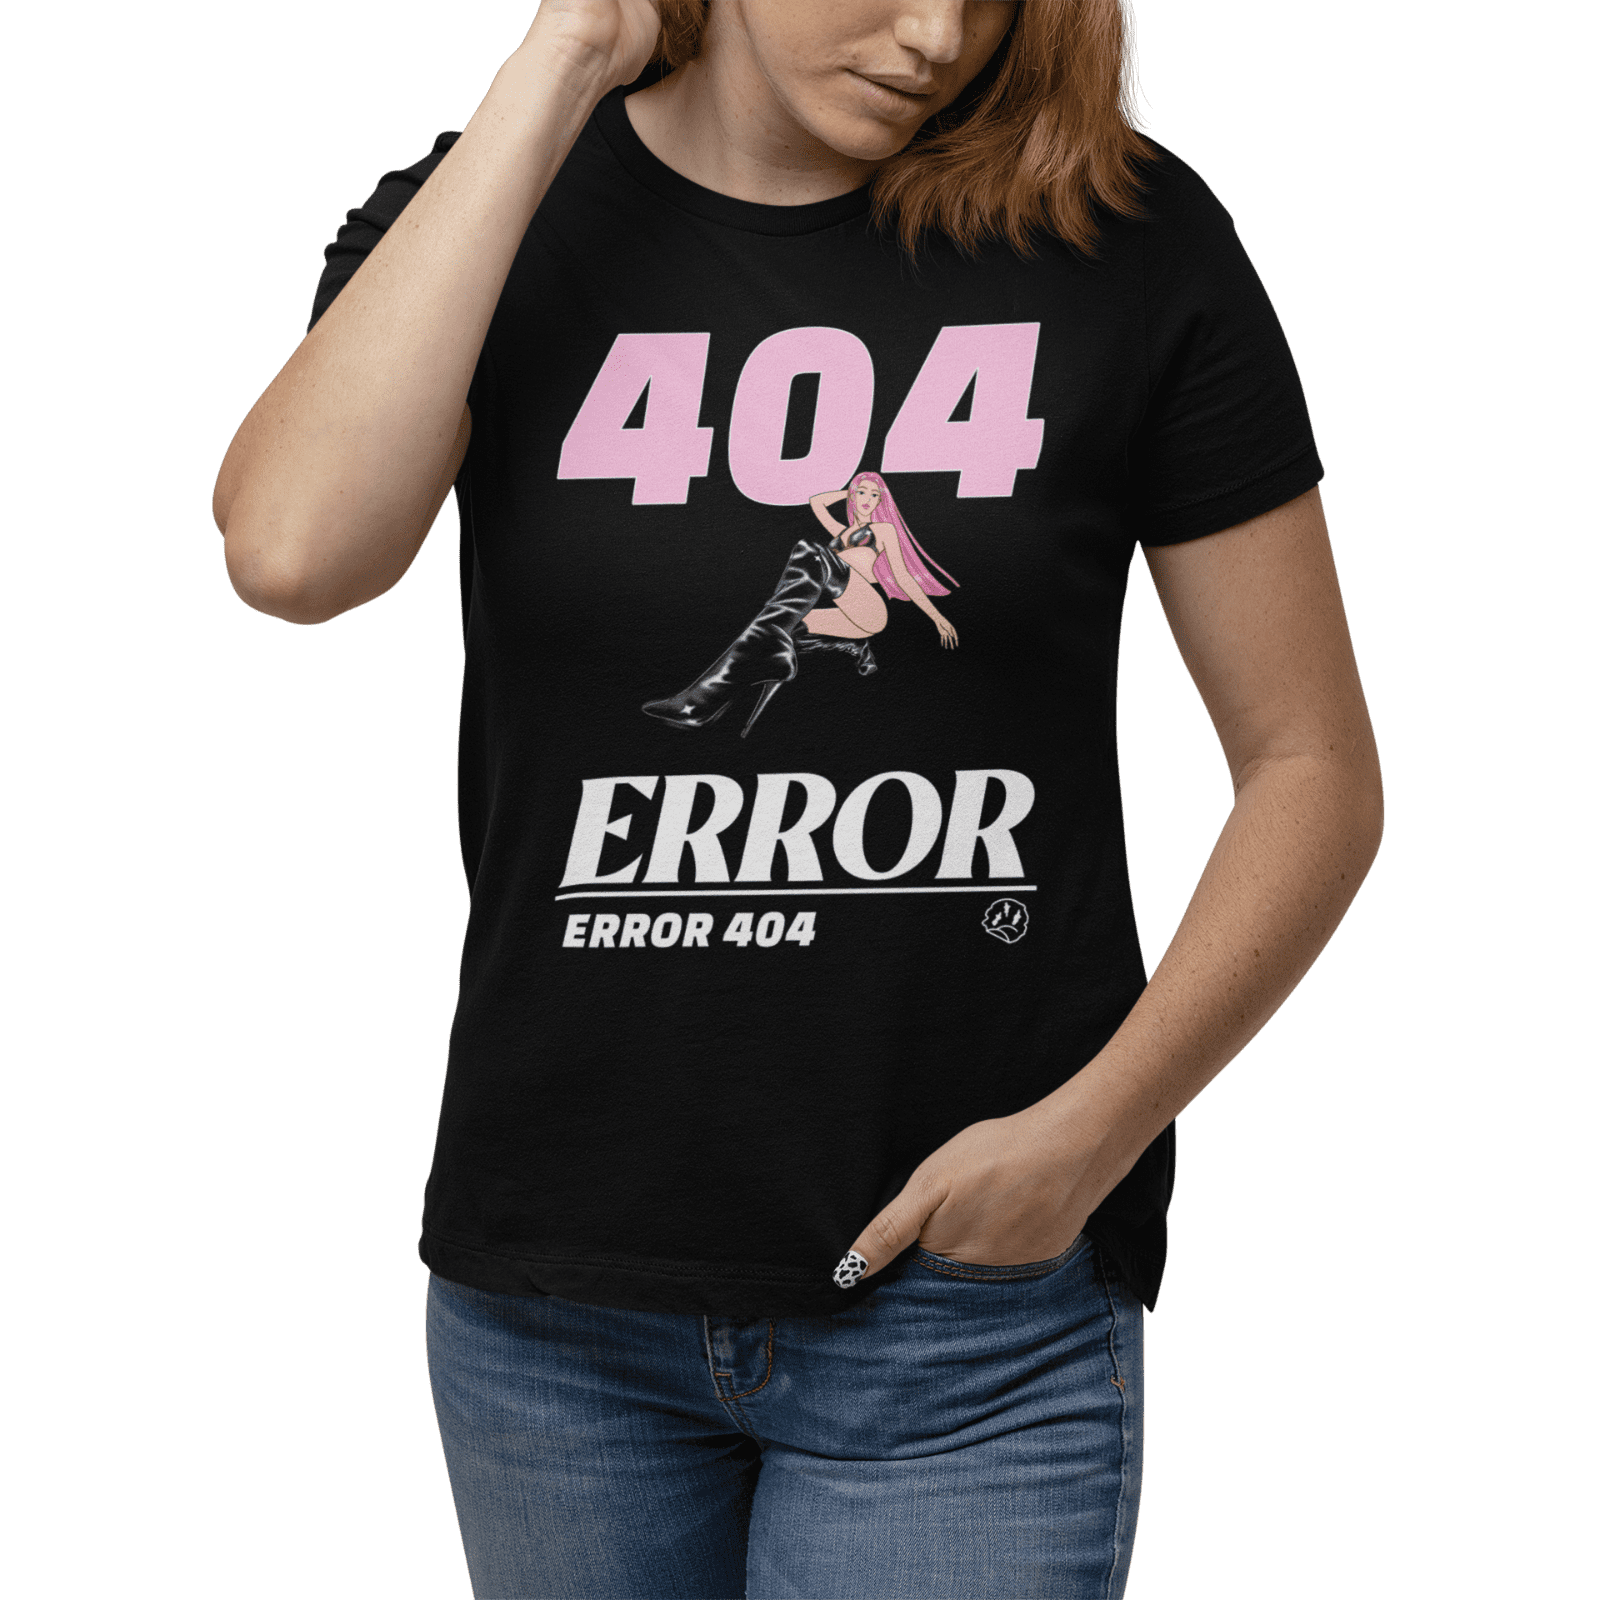 kiMaran Warrior T-Shirt 404 ERROR Female Warrior Anime Unisex Short SleeveTee (Black XL) - Walmart.com